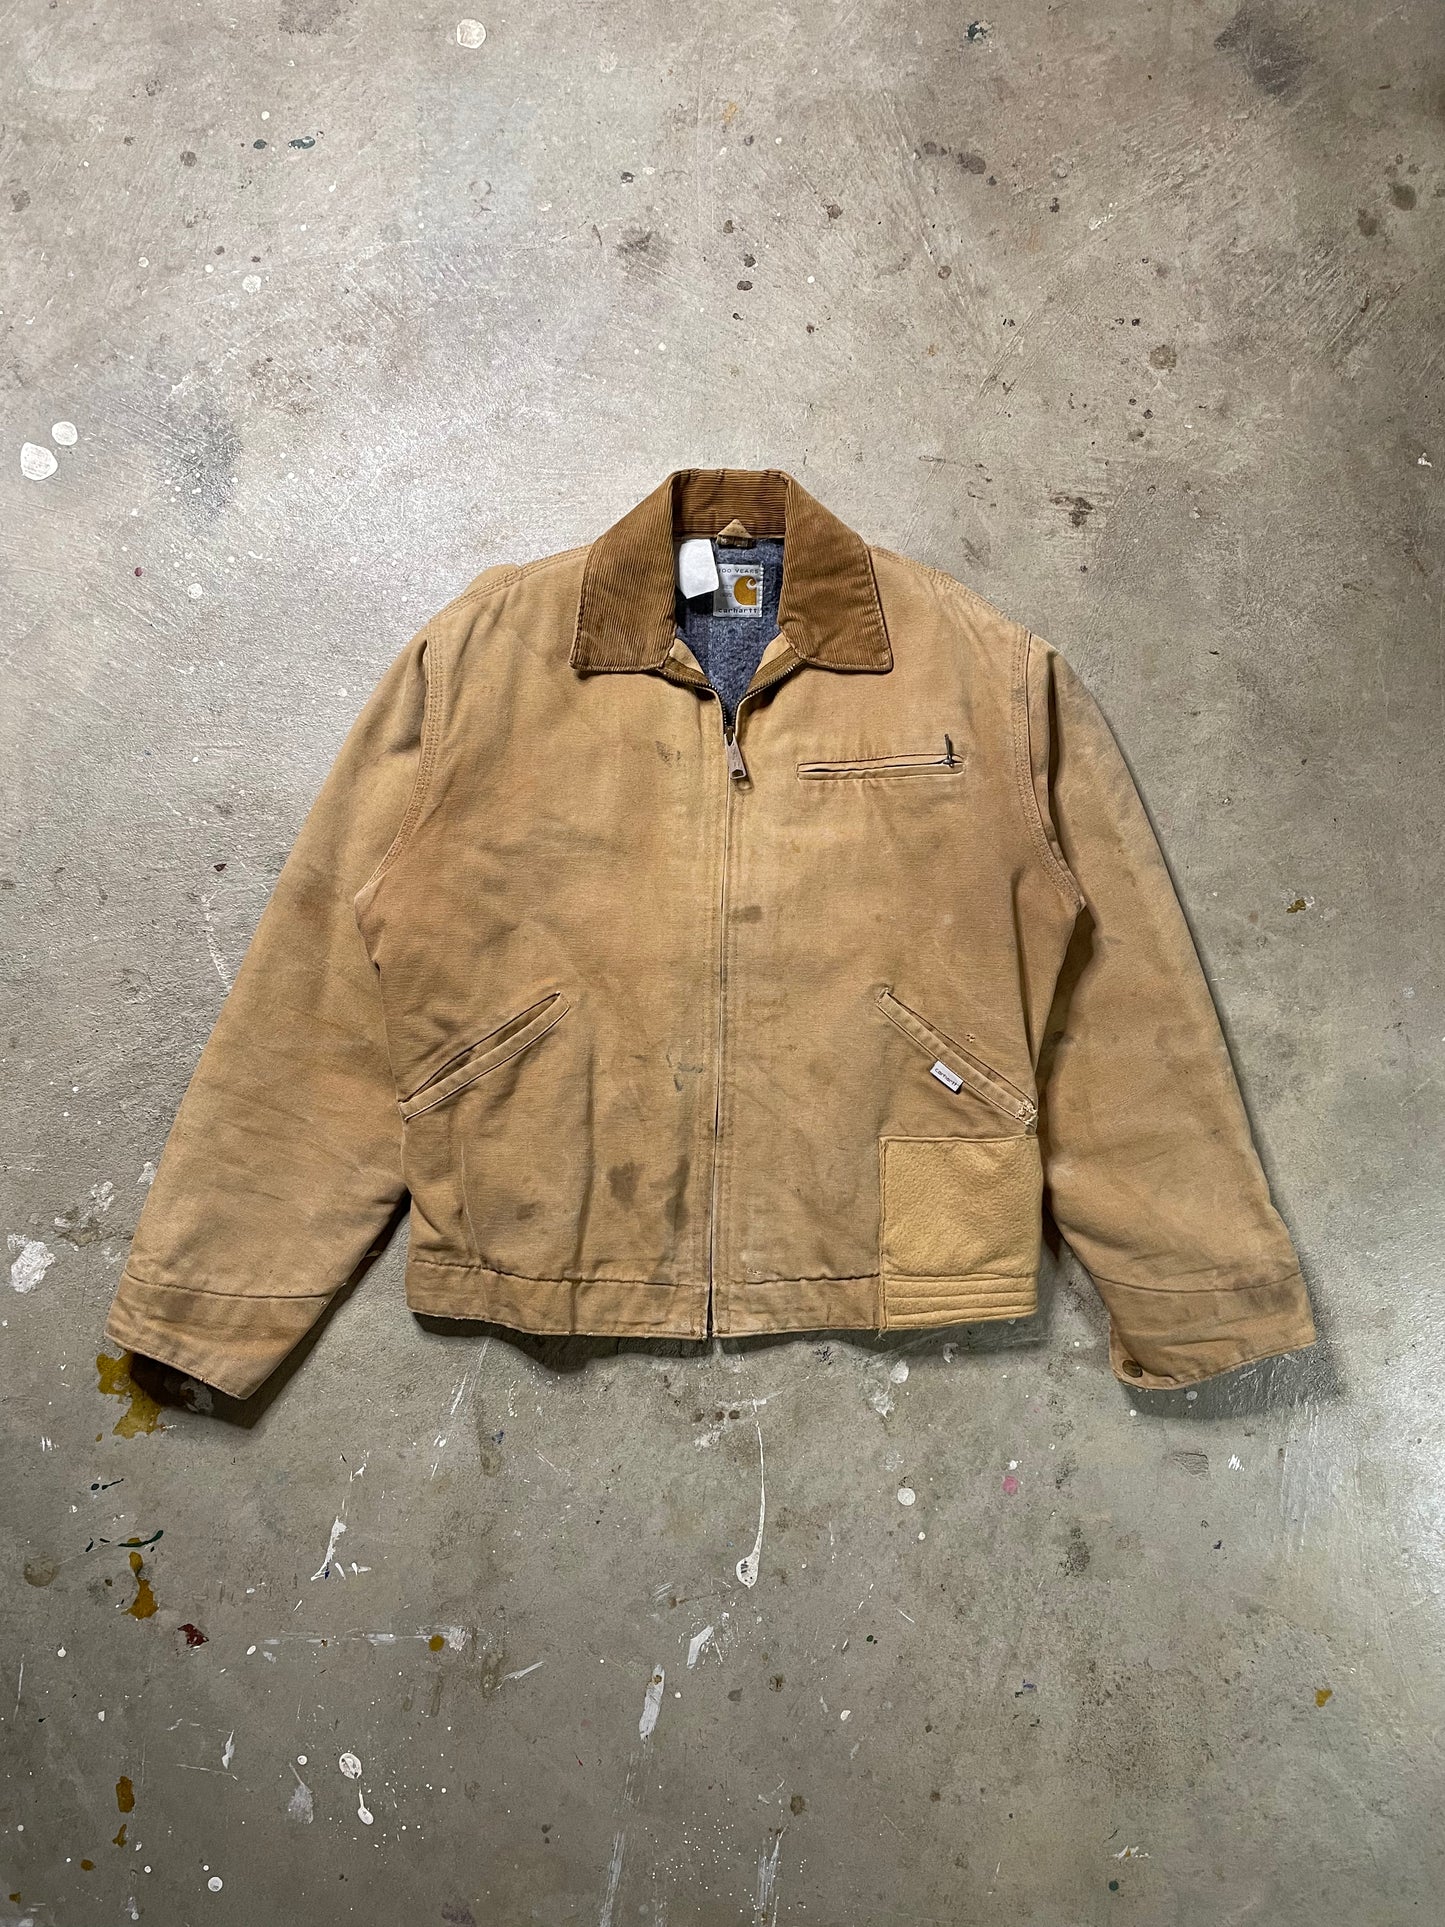 1989 Carhartt ‘100 years’ Lined Jacket